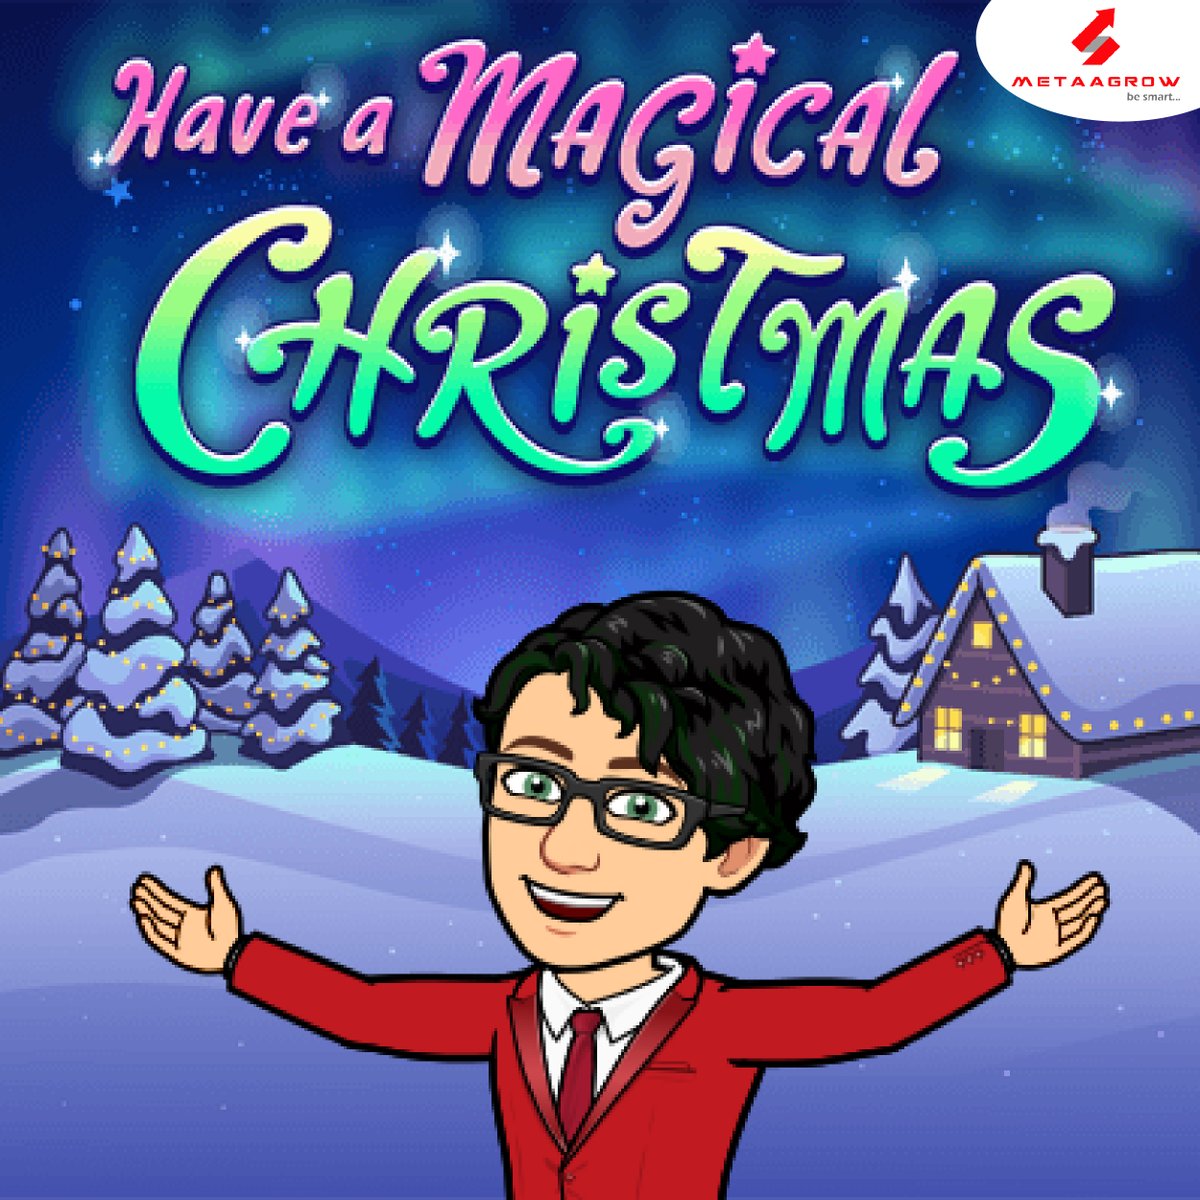 Metaagrow wishes you all a Merry Christmas. 

.

.

.

#Metaagrow #christmas #christmas2022 #merrychristmas #wishes  #tistheseason #cloud9basedsoftware #MaintenanceSoftware #DigitalChecklist #CloudBasedSoftware #OperationsManagementSoftware #festiveseason #MerryXmas